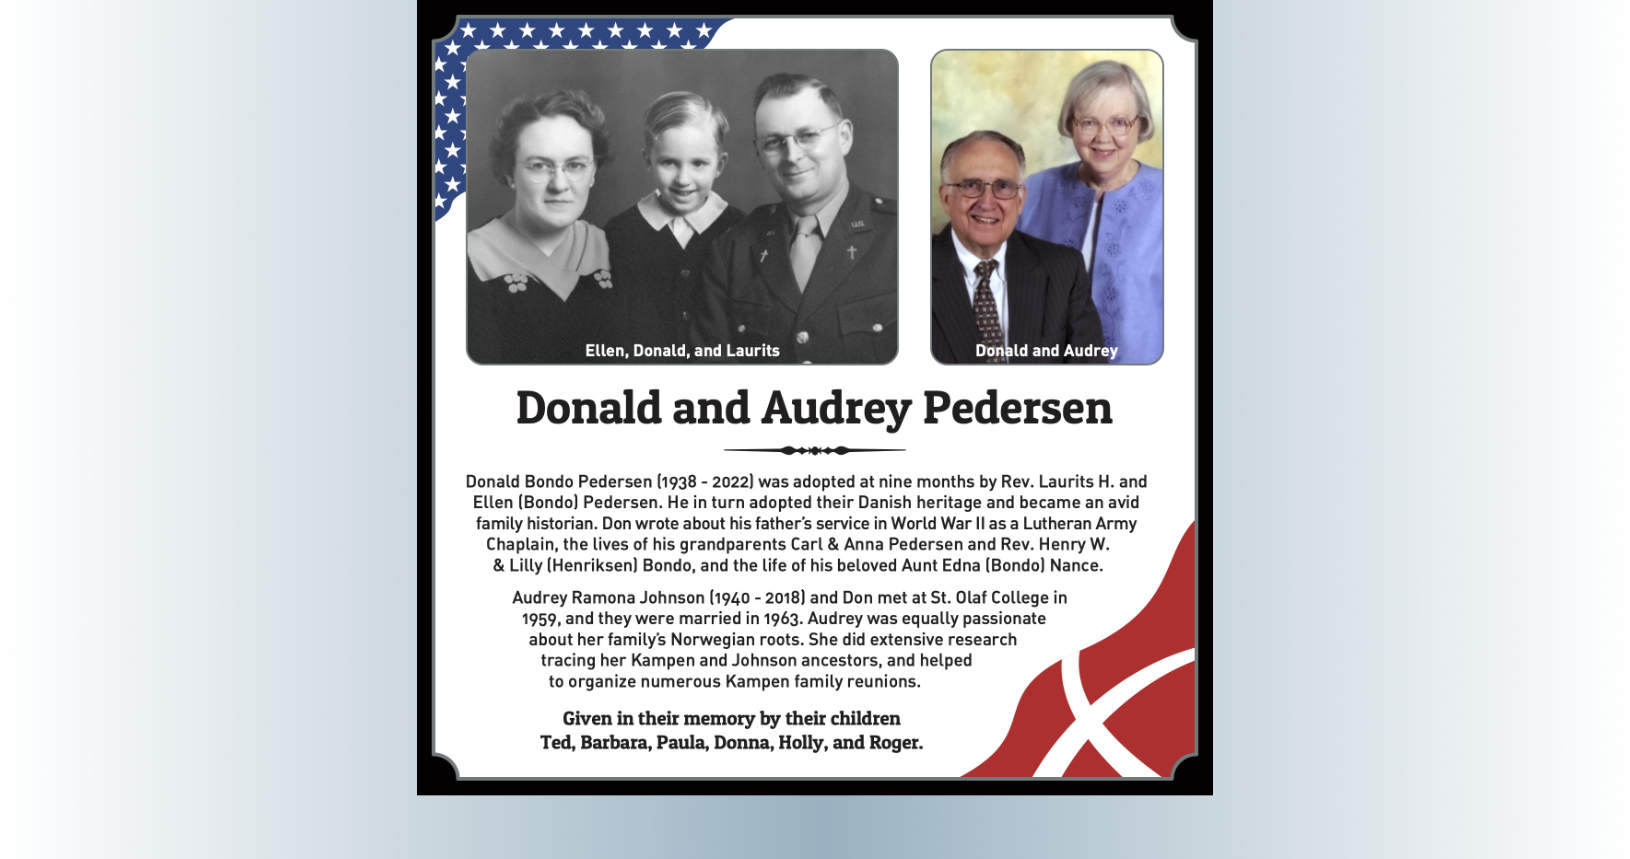 Donald and Audrey Pedersen